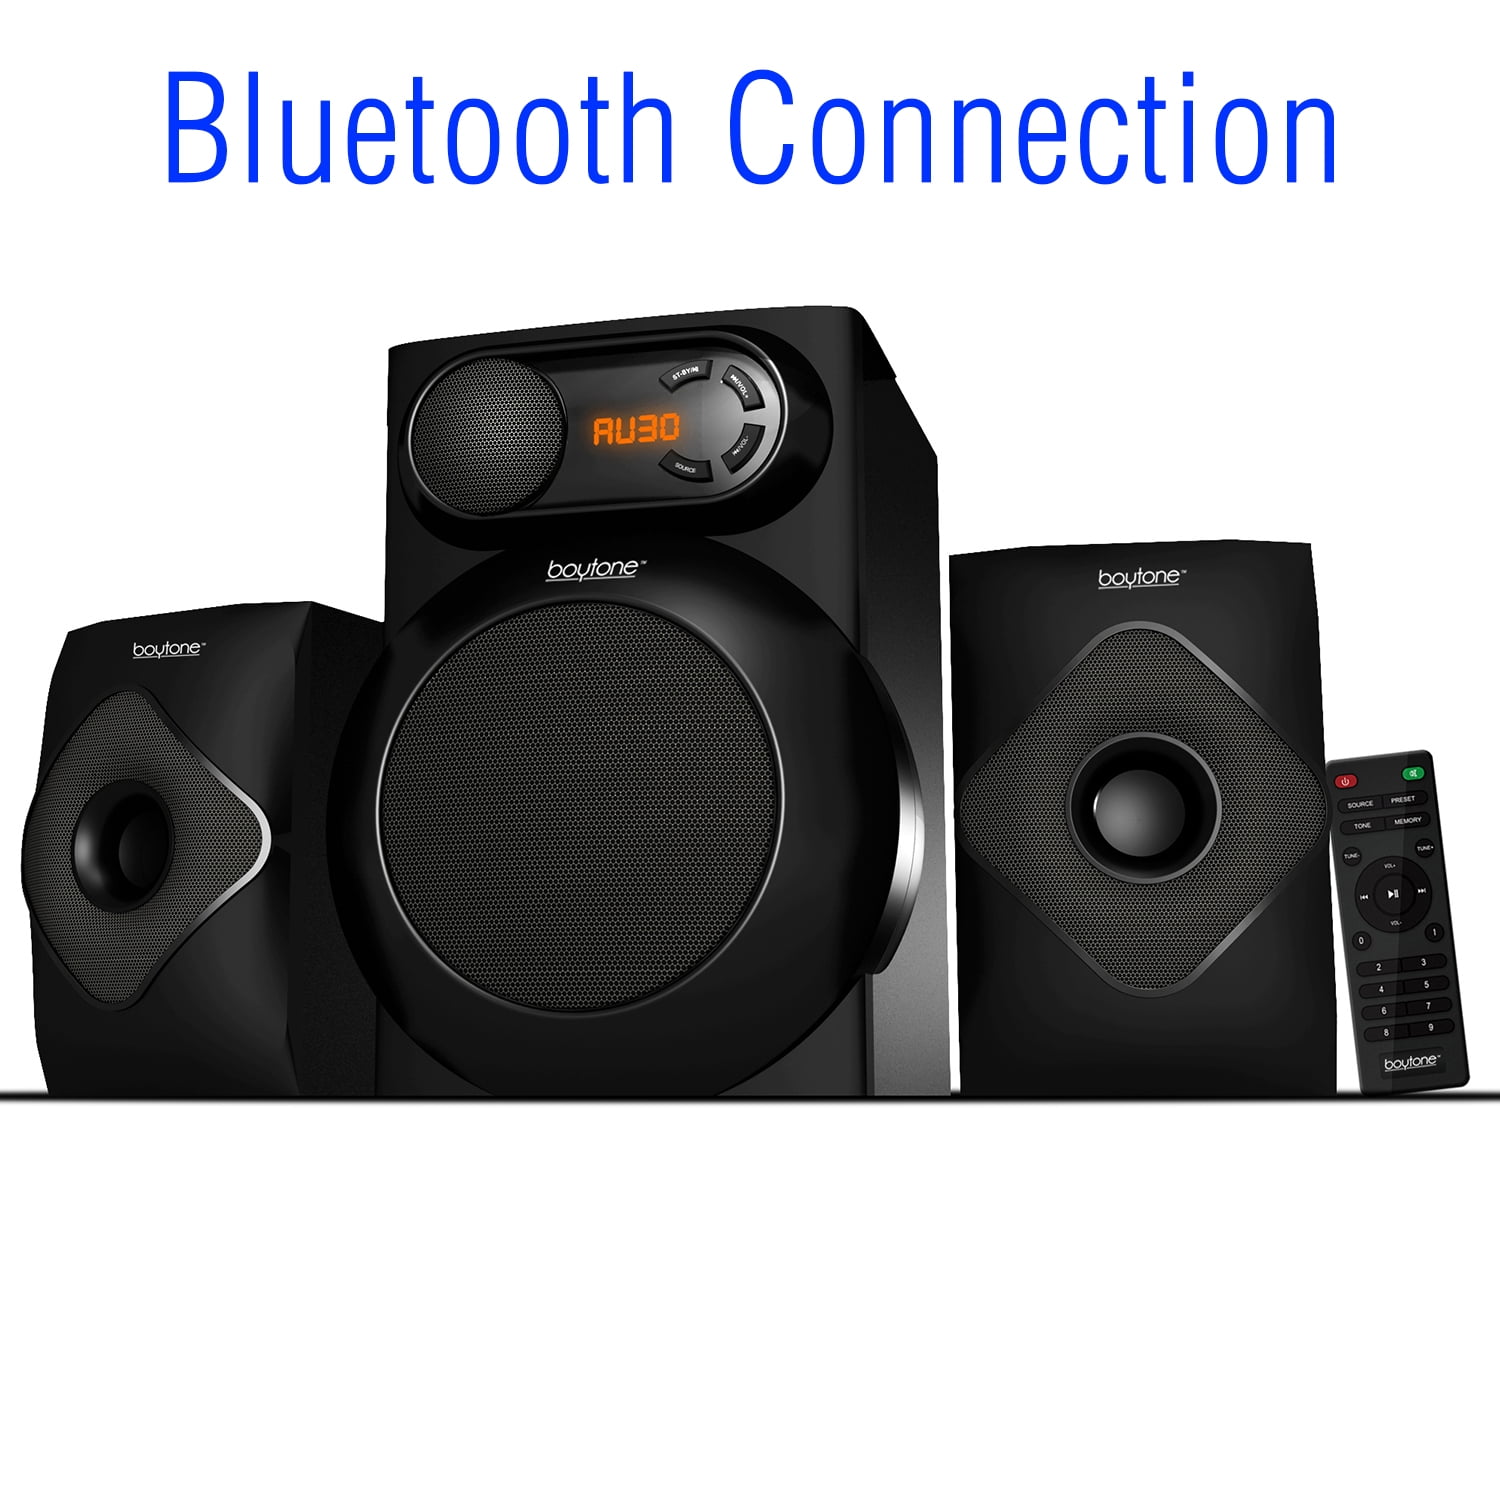 Boytone BT-220FN, Bluetooth Connection, 2.1 Multimedia speaker system ...